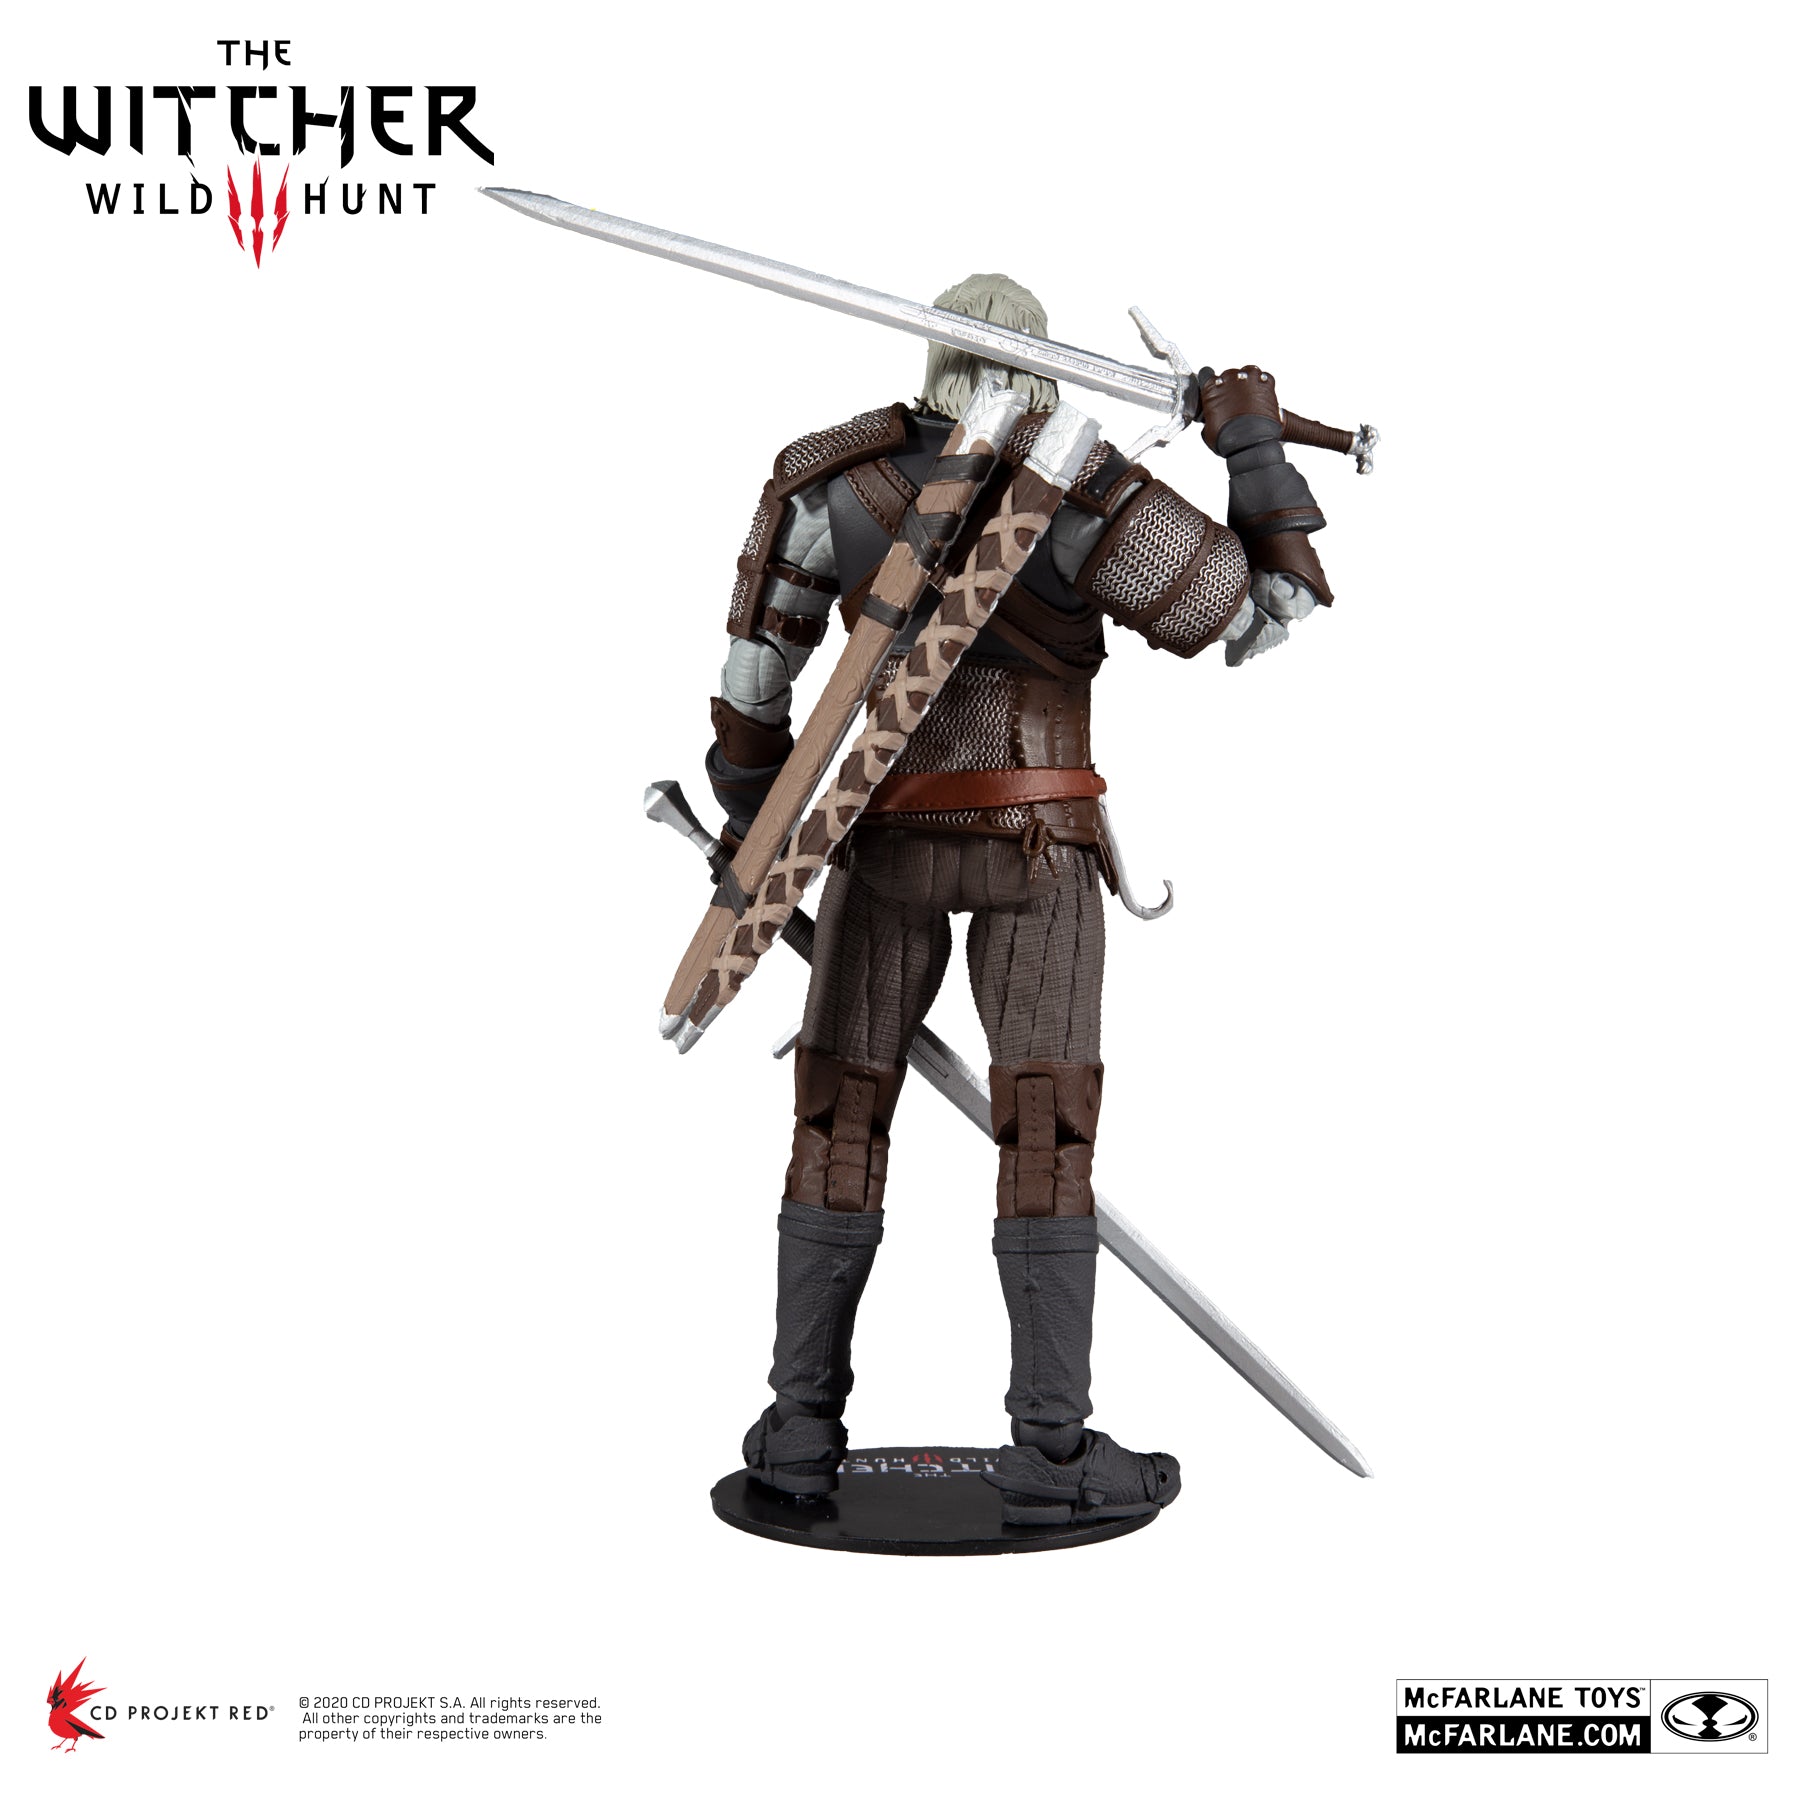 Witcher 3 Wild Hunt Geralt of Rivia 7" Figure - McFarlane Toys